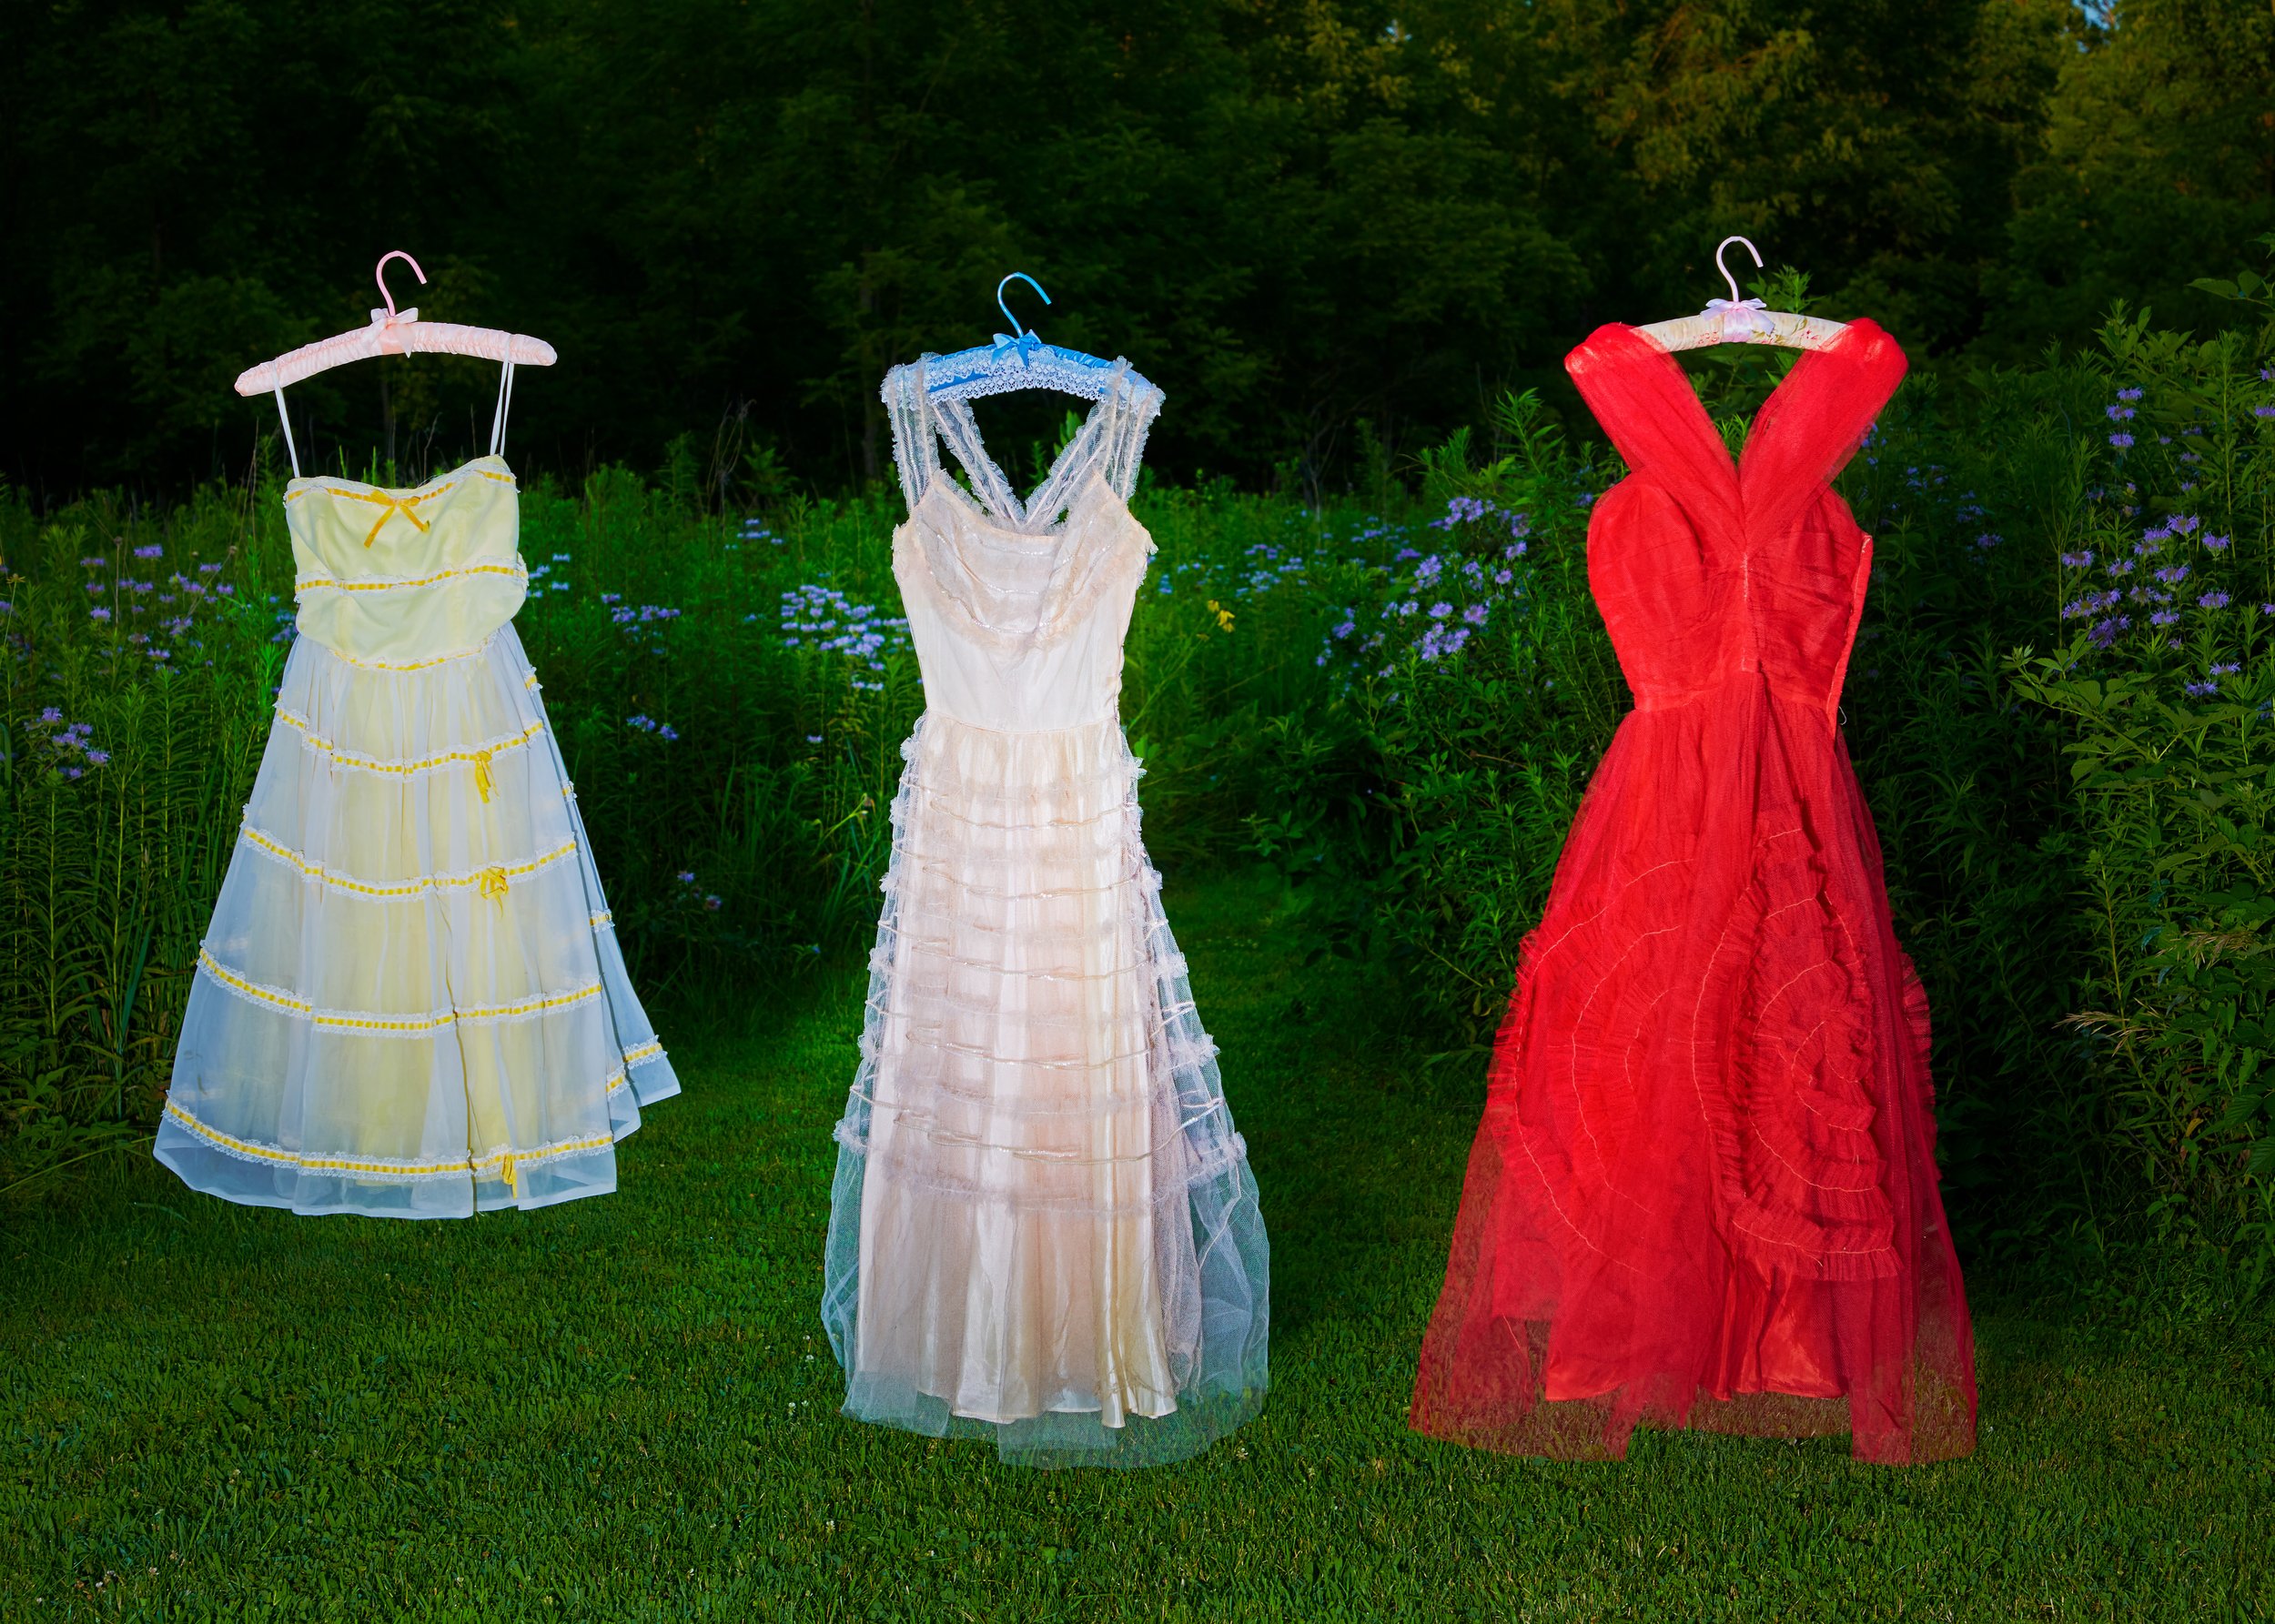 dresses in prarie13226(2).jpg